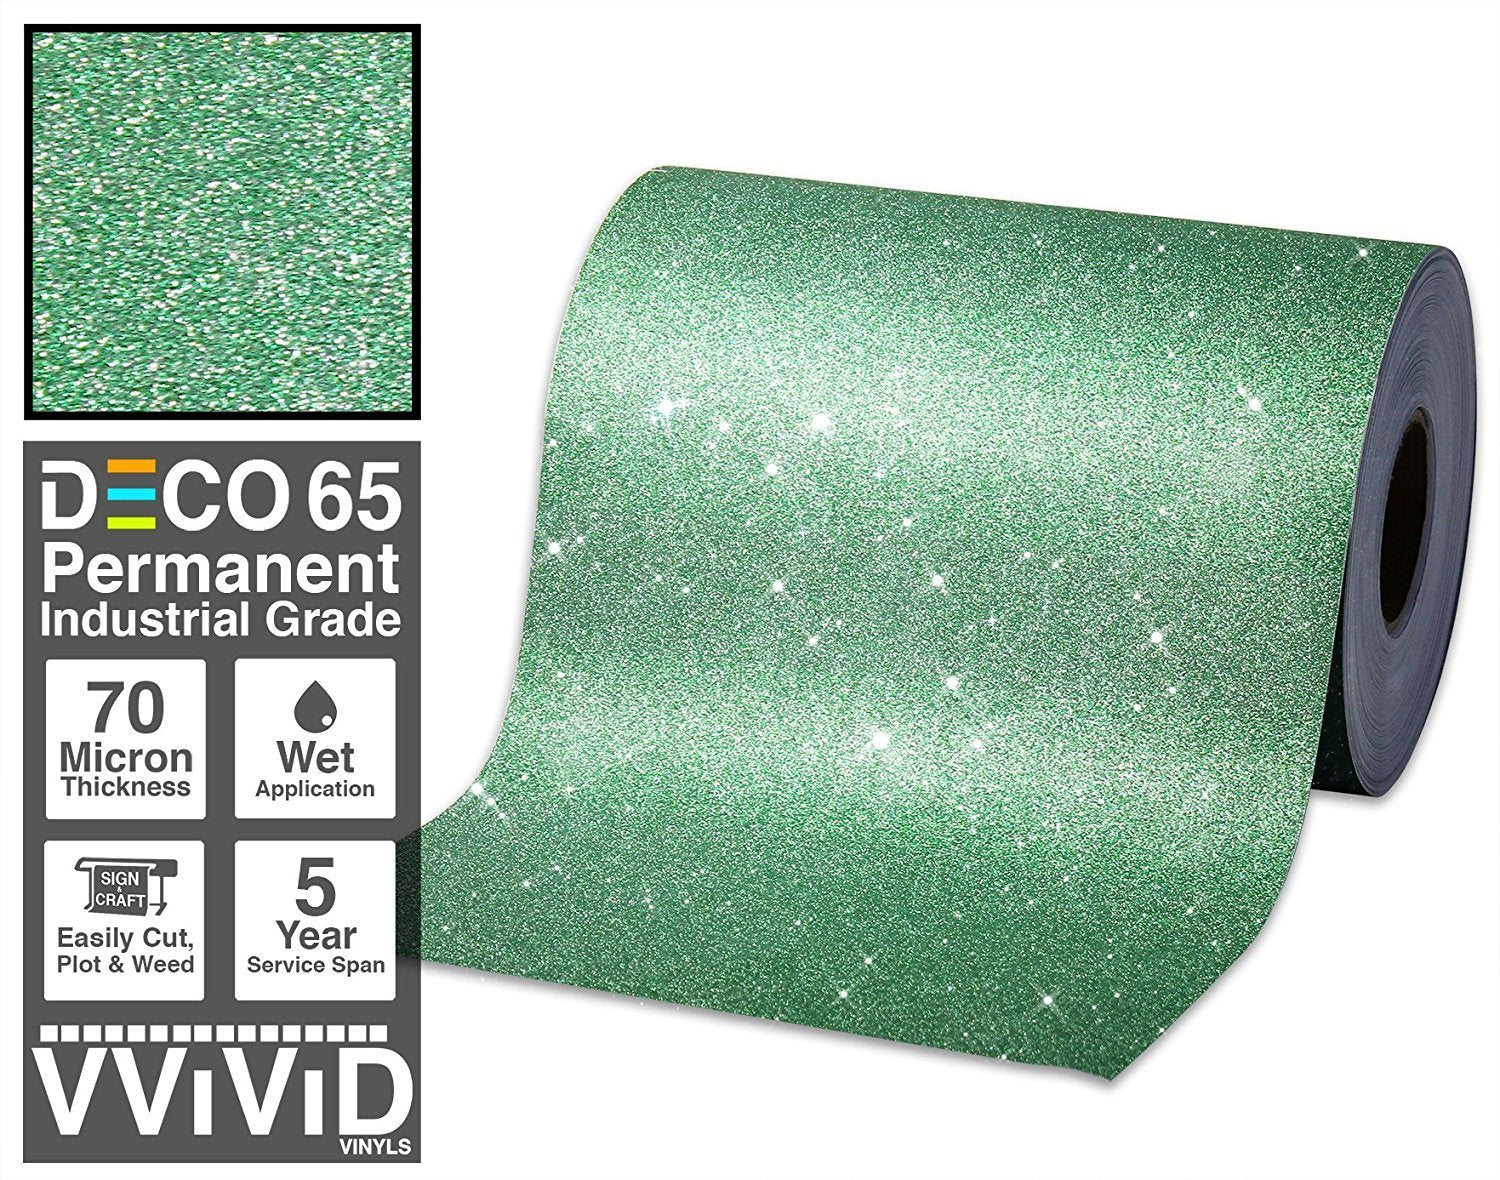 Deco65 Green Glitter Craft Vinyl - The VViViD Vinyl Wrap Shop